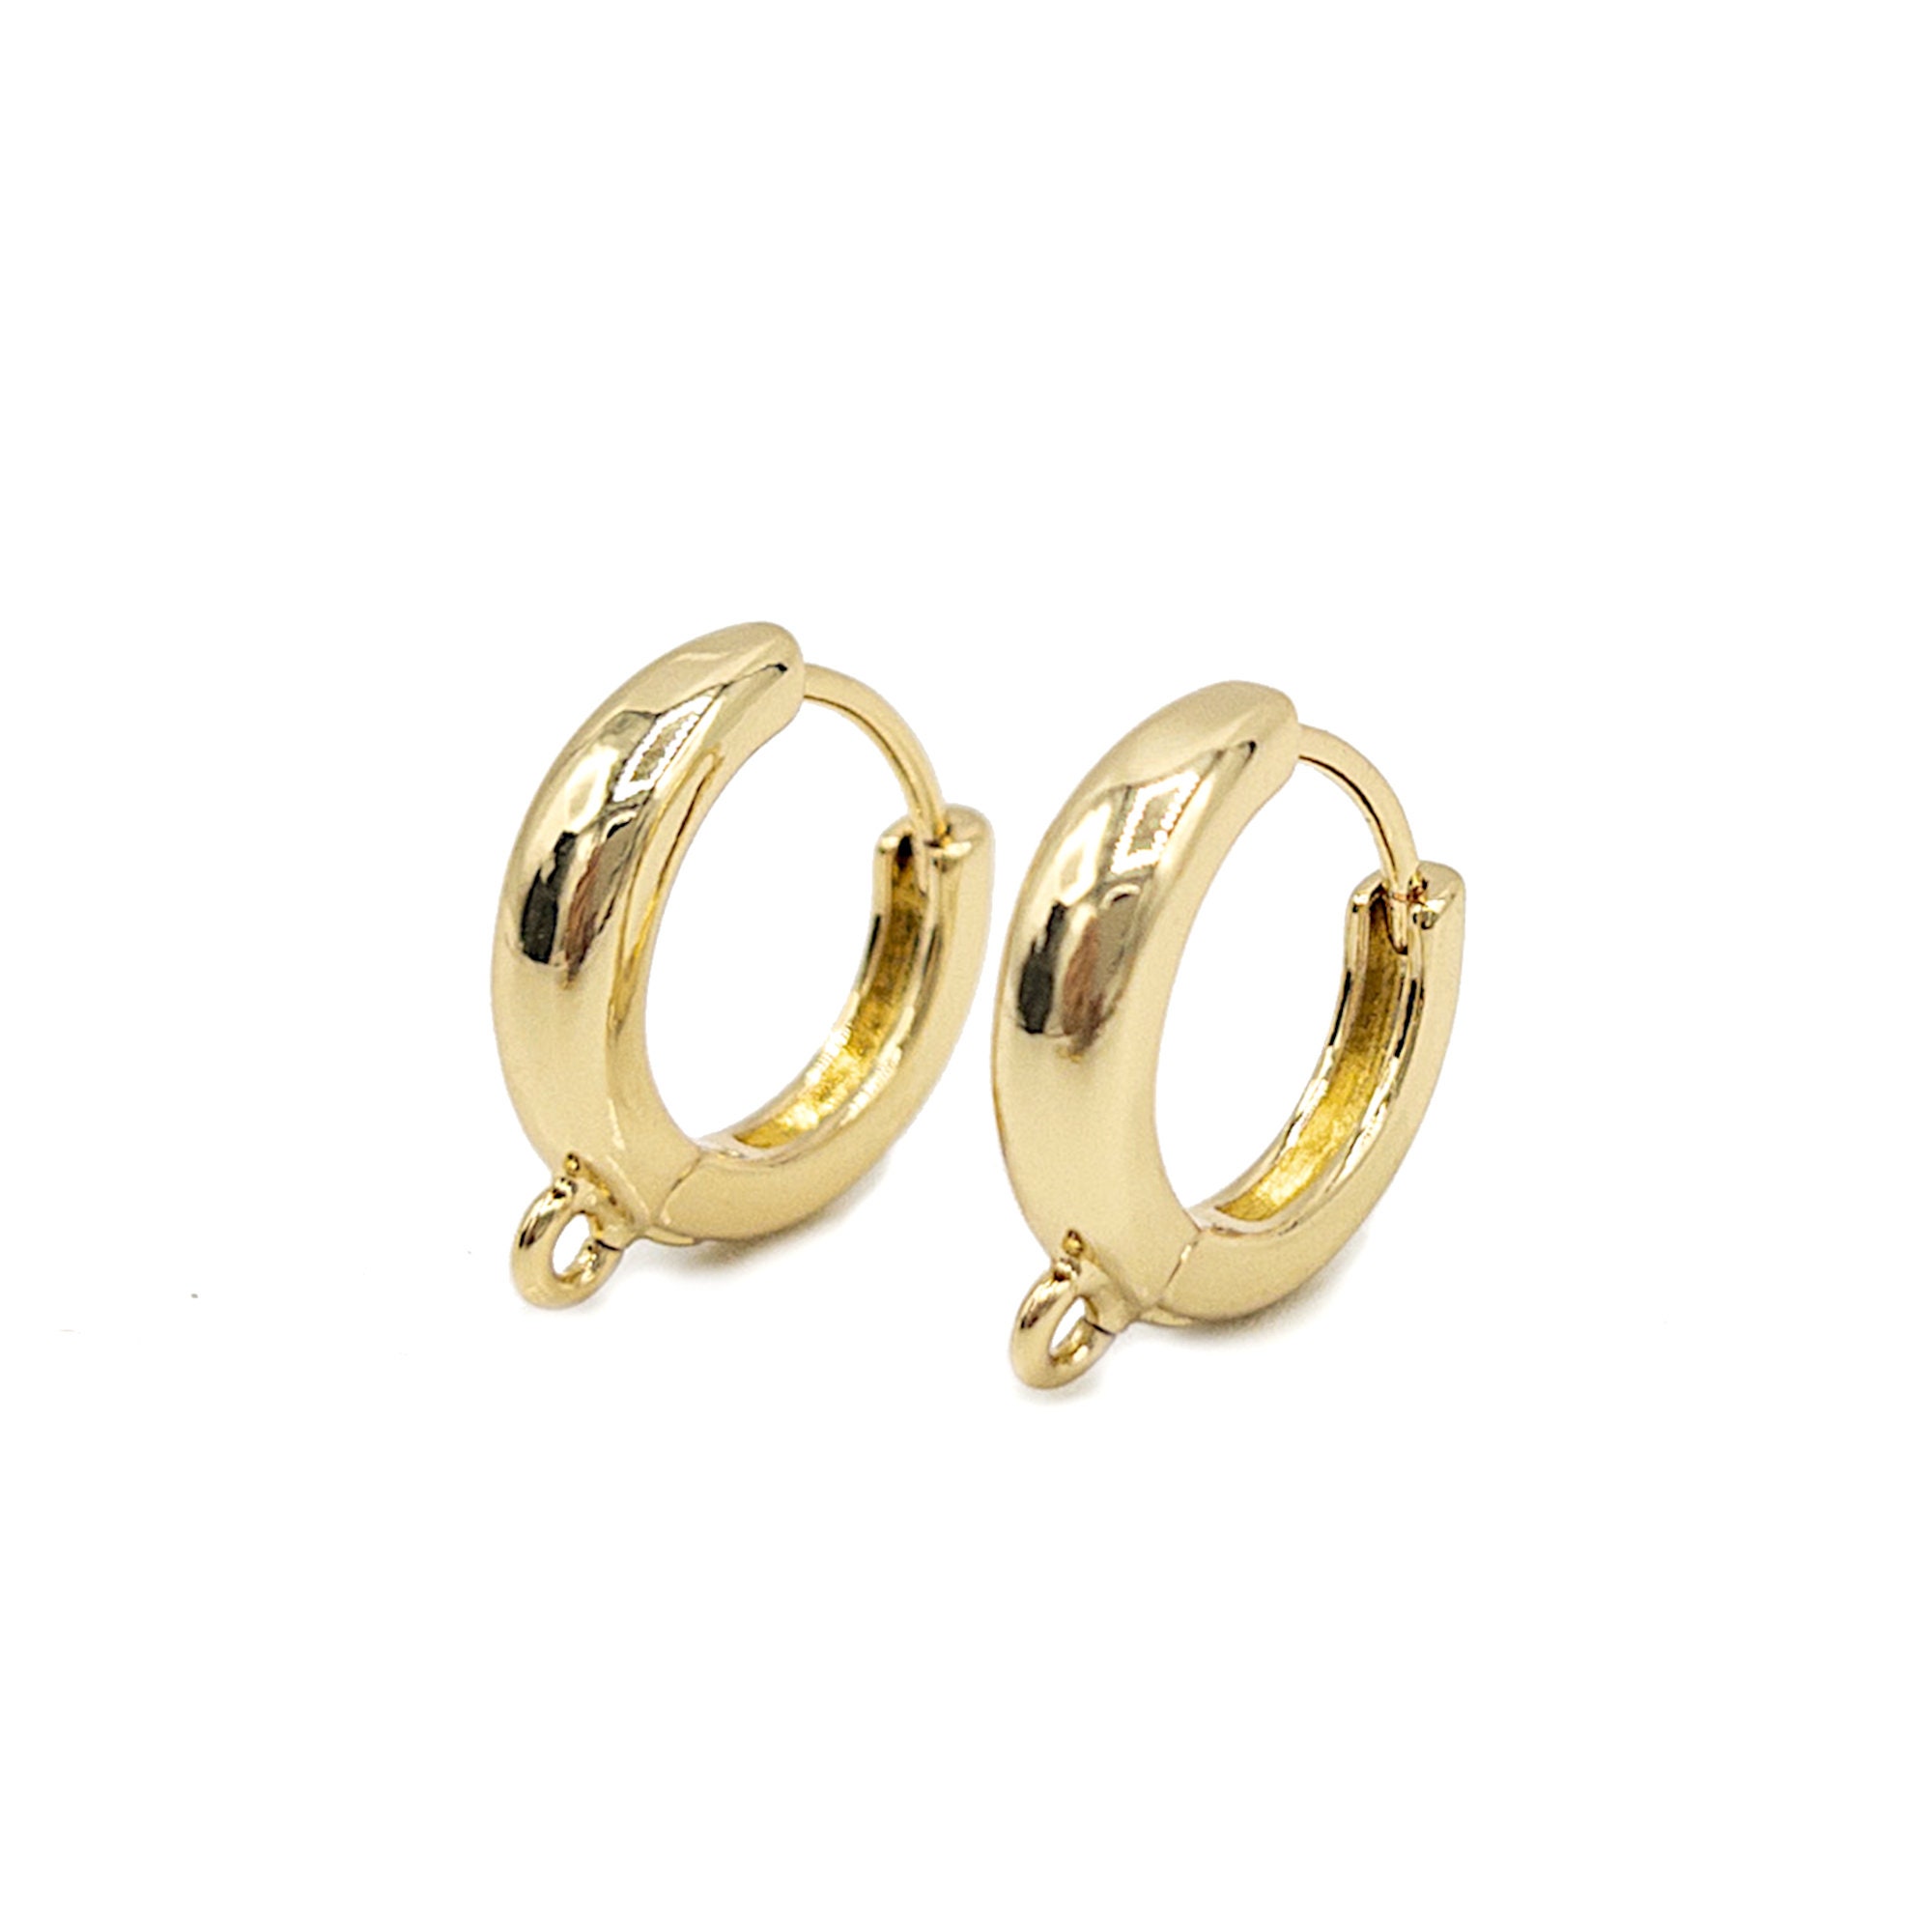  MAIBAOTA Gold Earring Hooks for Jewelry Making, 602 Pcs  Hypoallergenic Gold Plated Earring Hooks, Jump Rings, Earring Findings,  Rubber Earring Backs, DIY Jewelry Making Supplies Kit